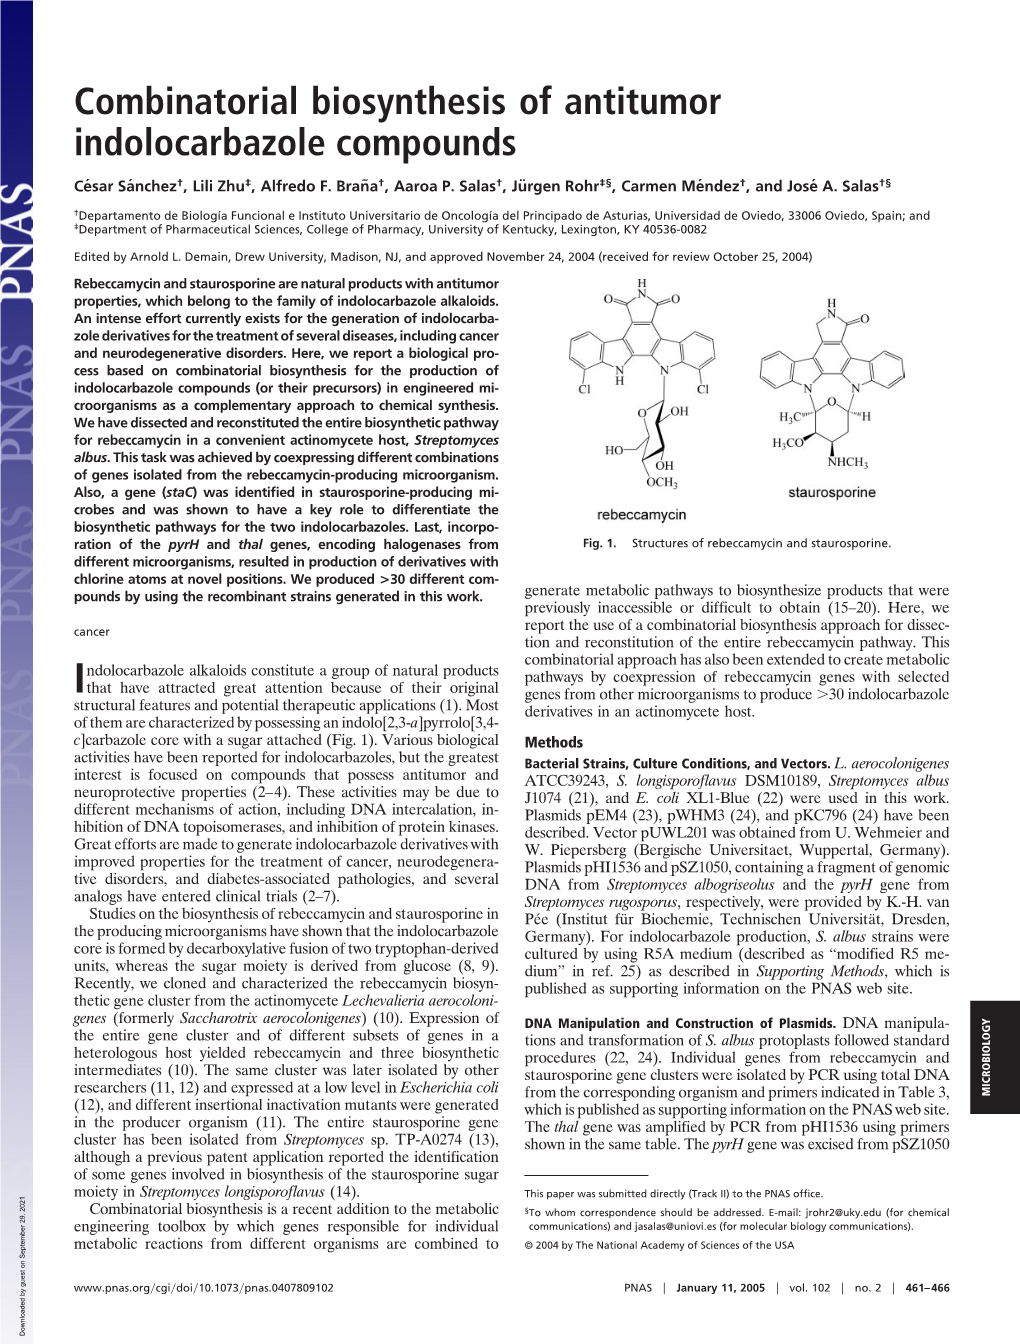 Combinatorial Biosynthesis of Antitumor Indolocarbazole Compounds